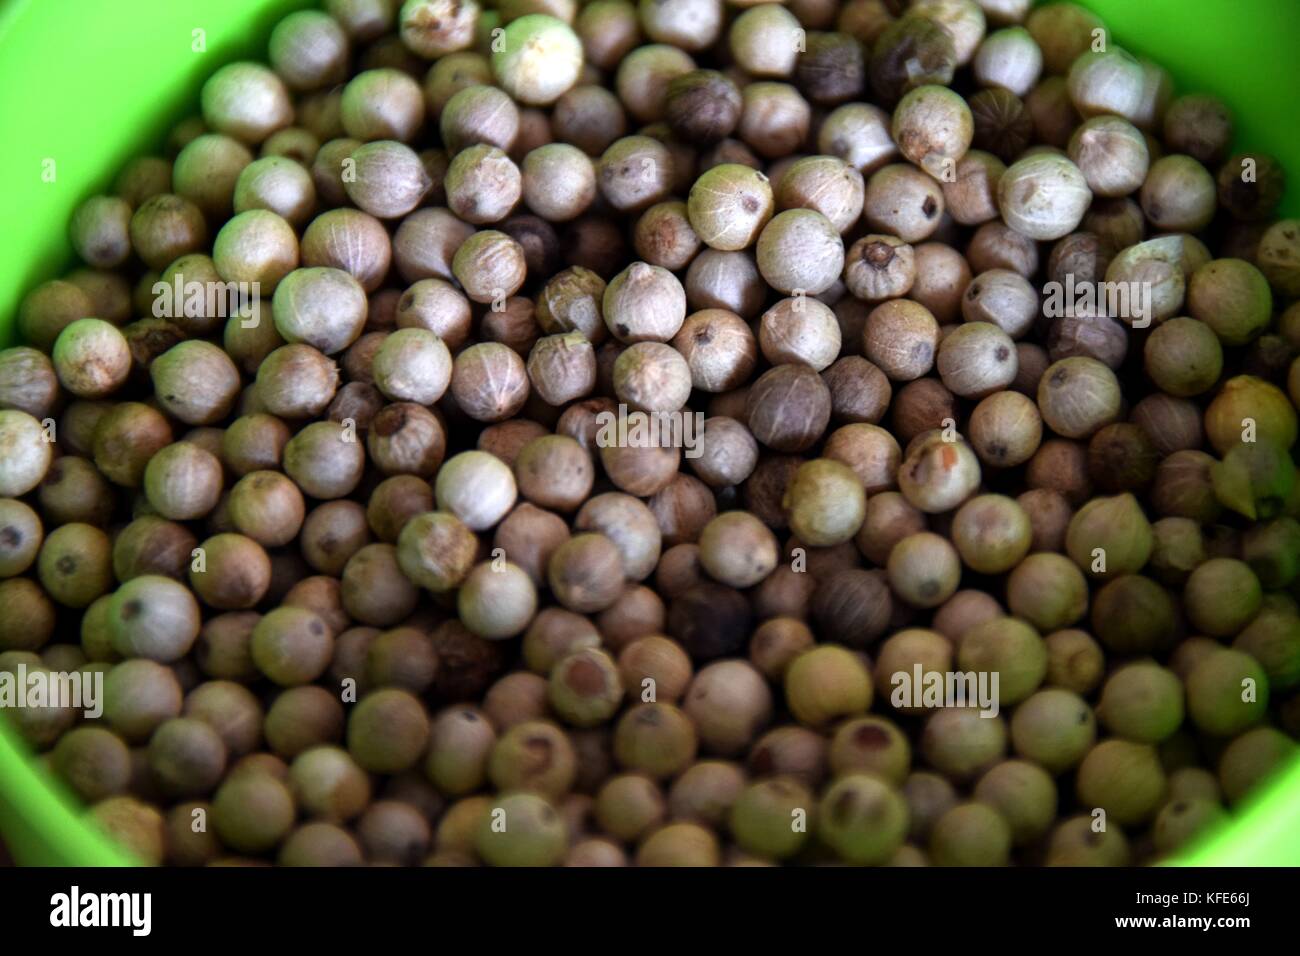 grains of pepper, white peppercorns in a green box Stock Photo